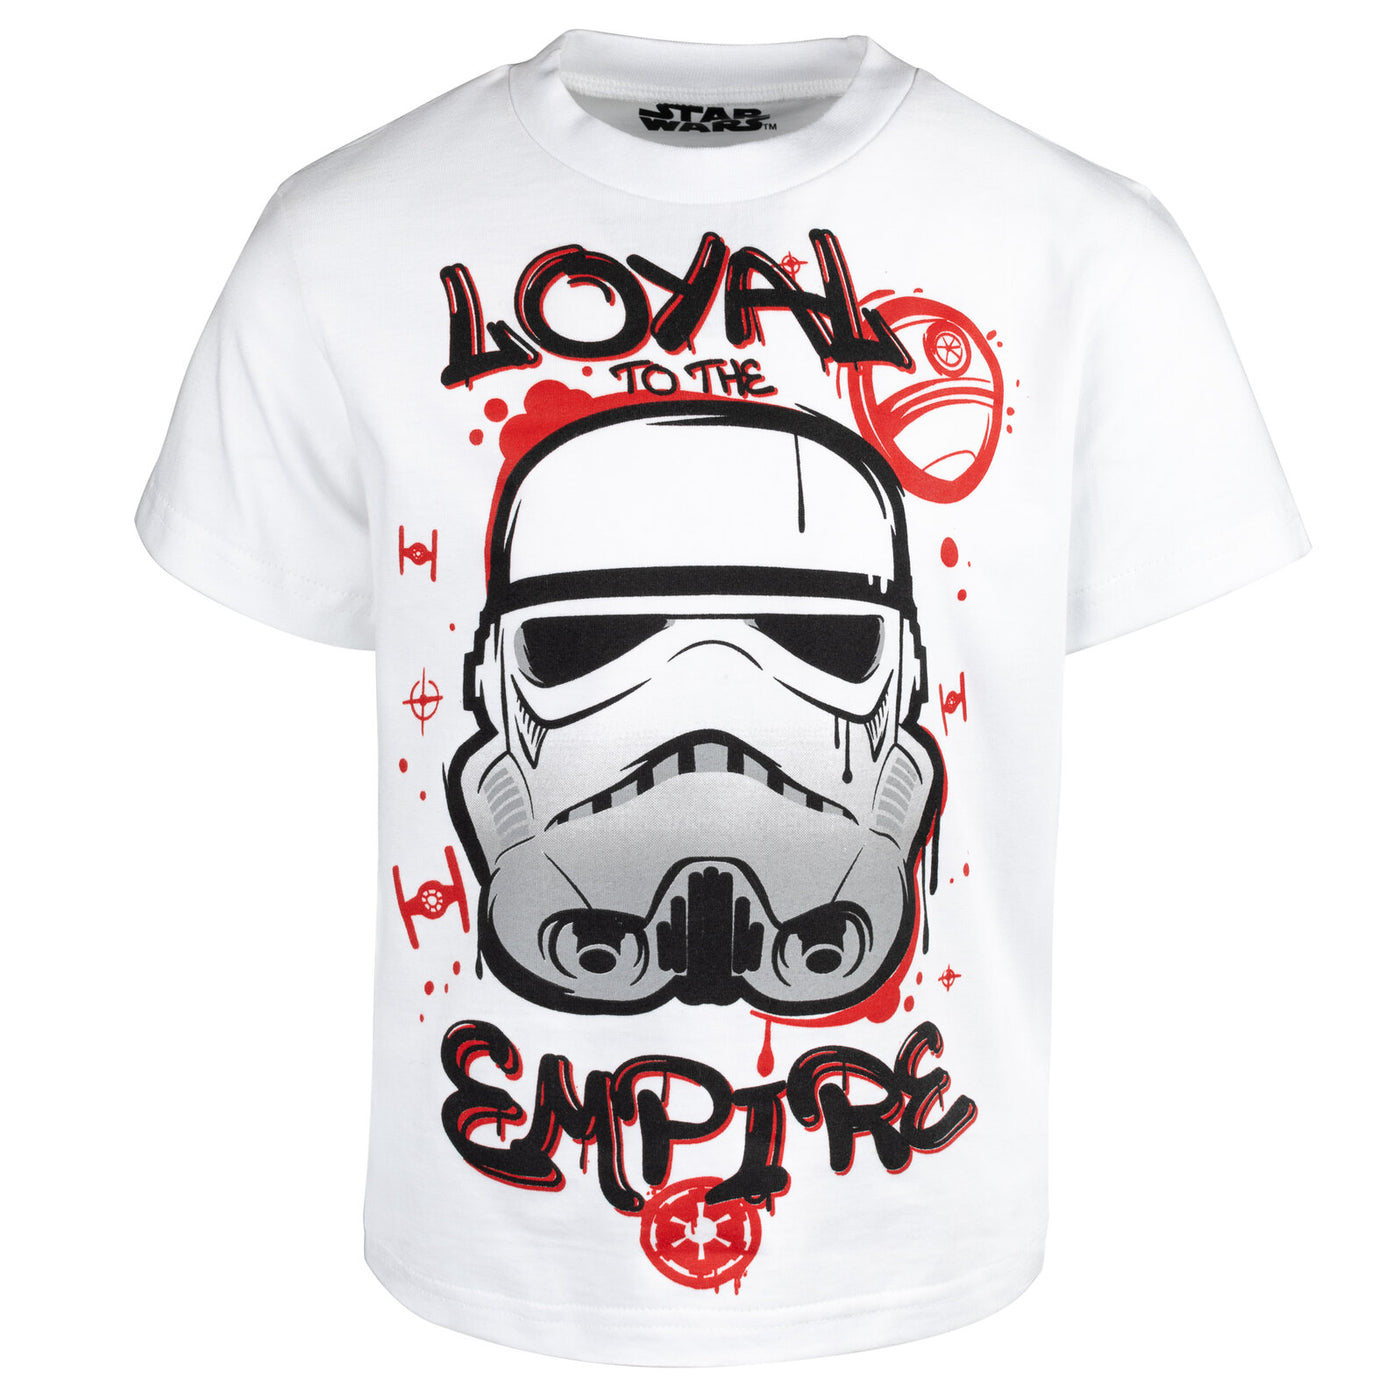 STAR WARS Star Wars Stormtrooper T-Shirt and Mesh Shorts Outfit Set